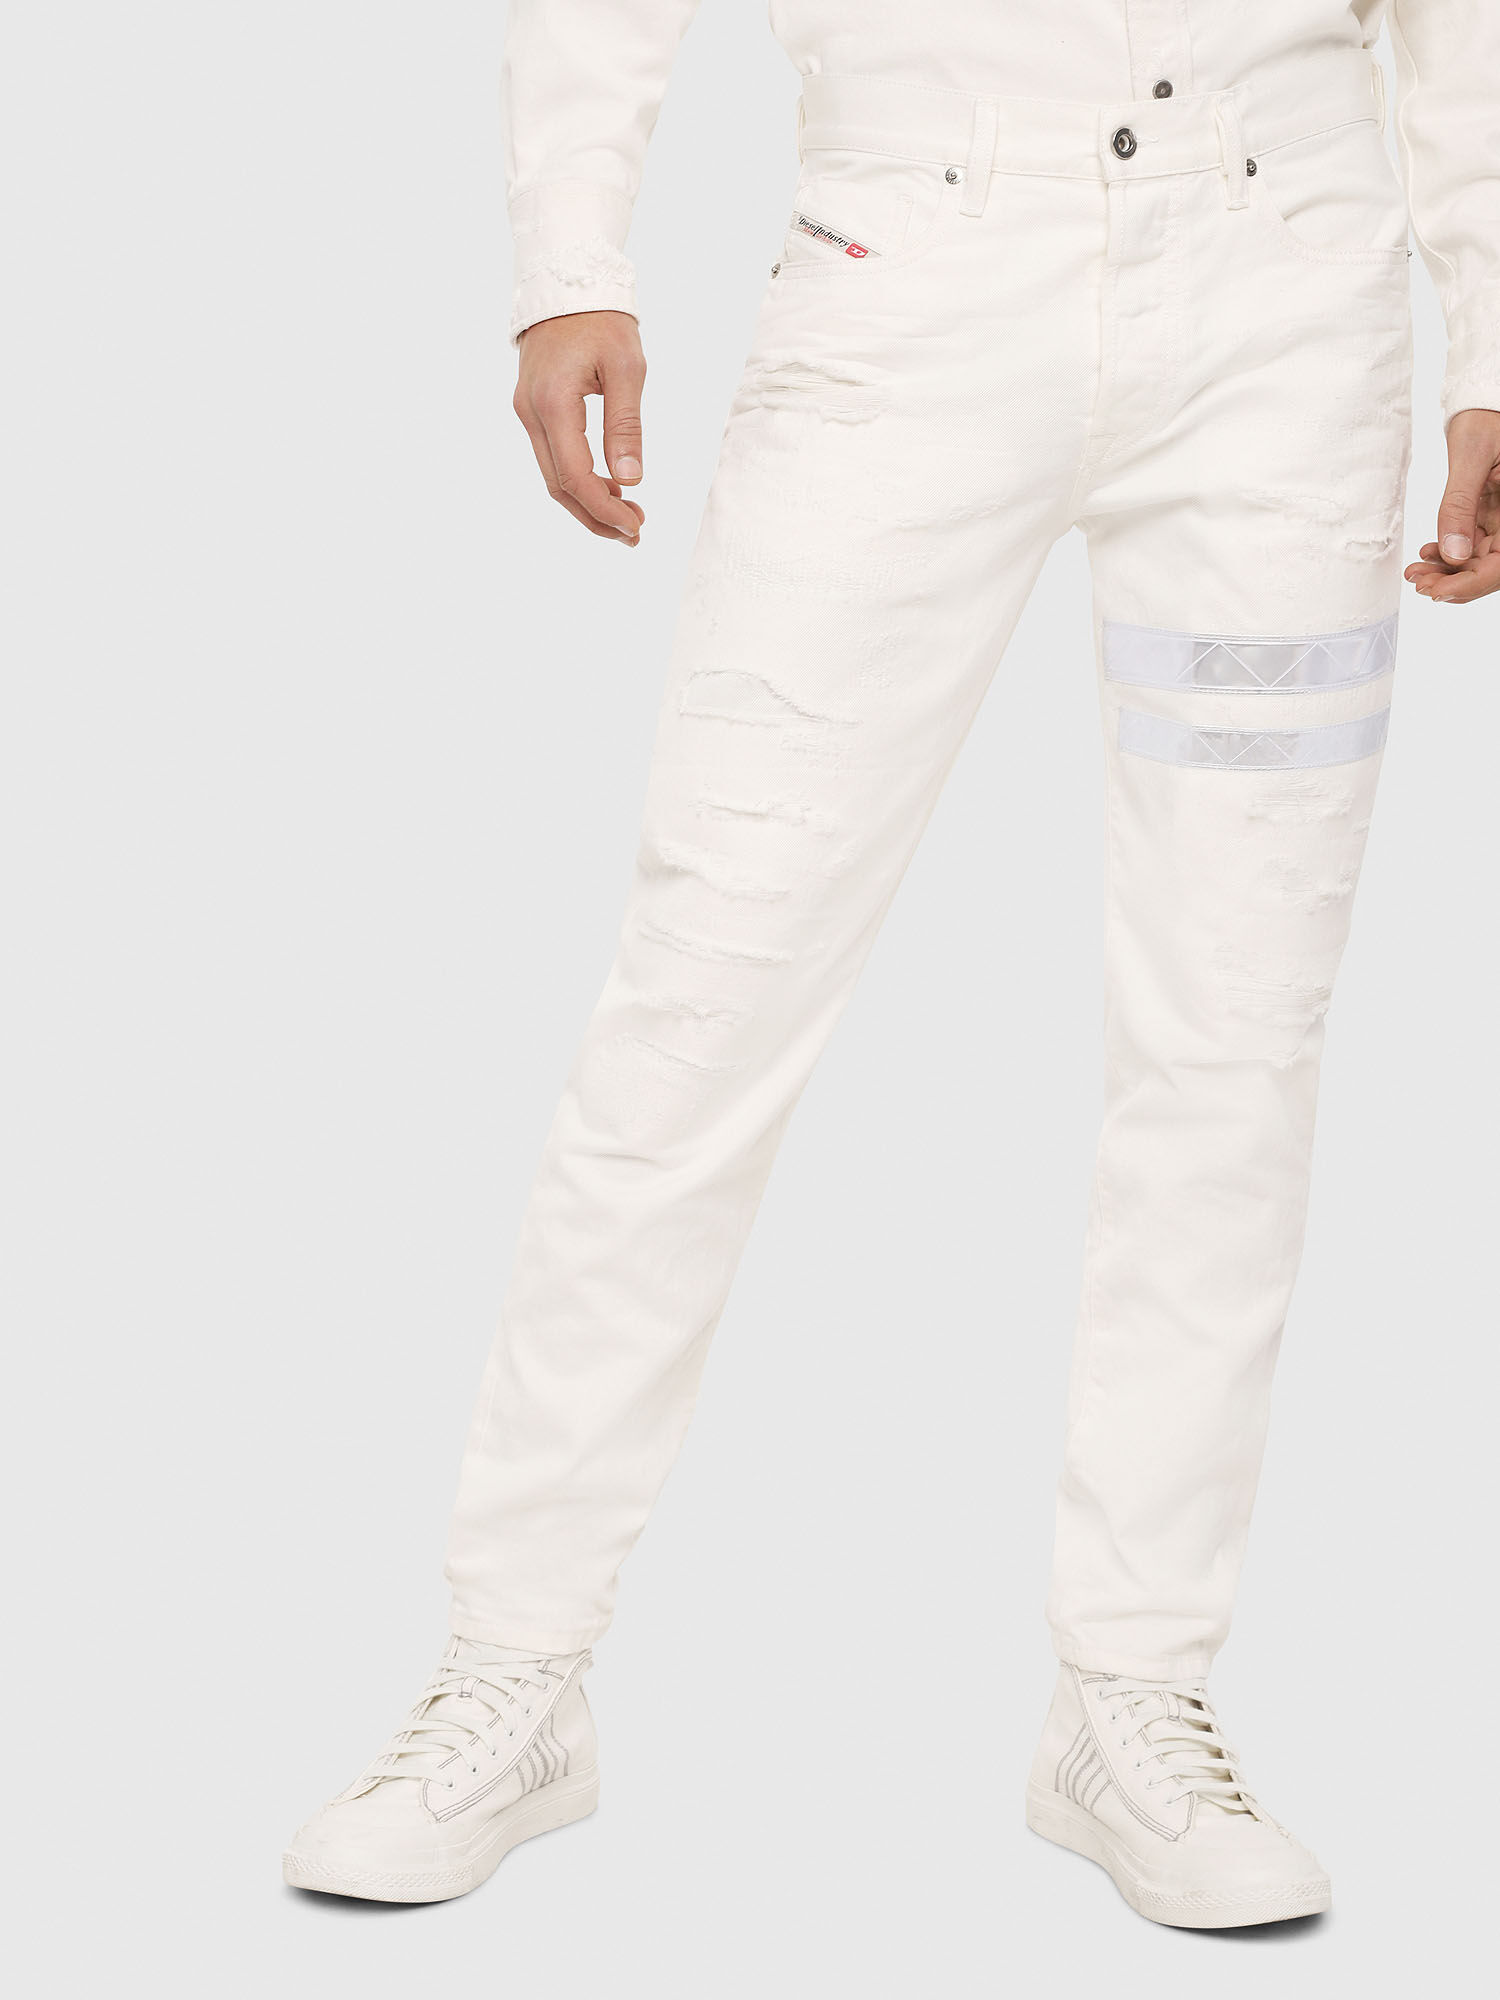 white diesel jeans mens